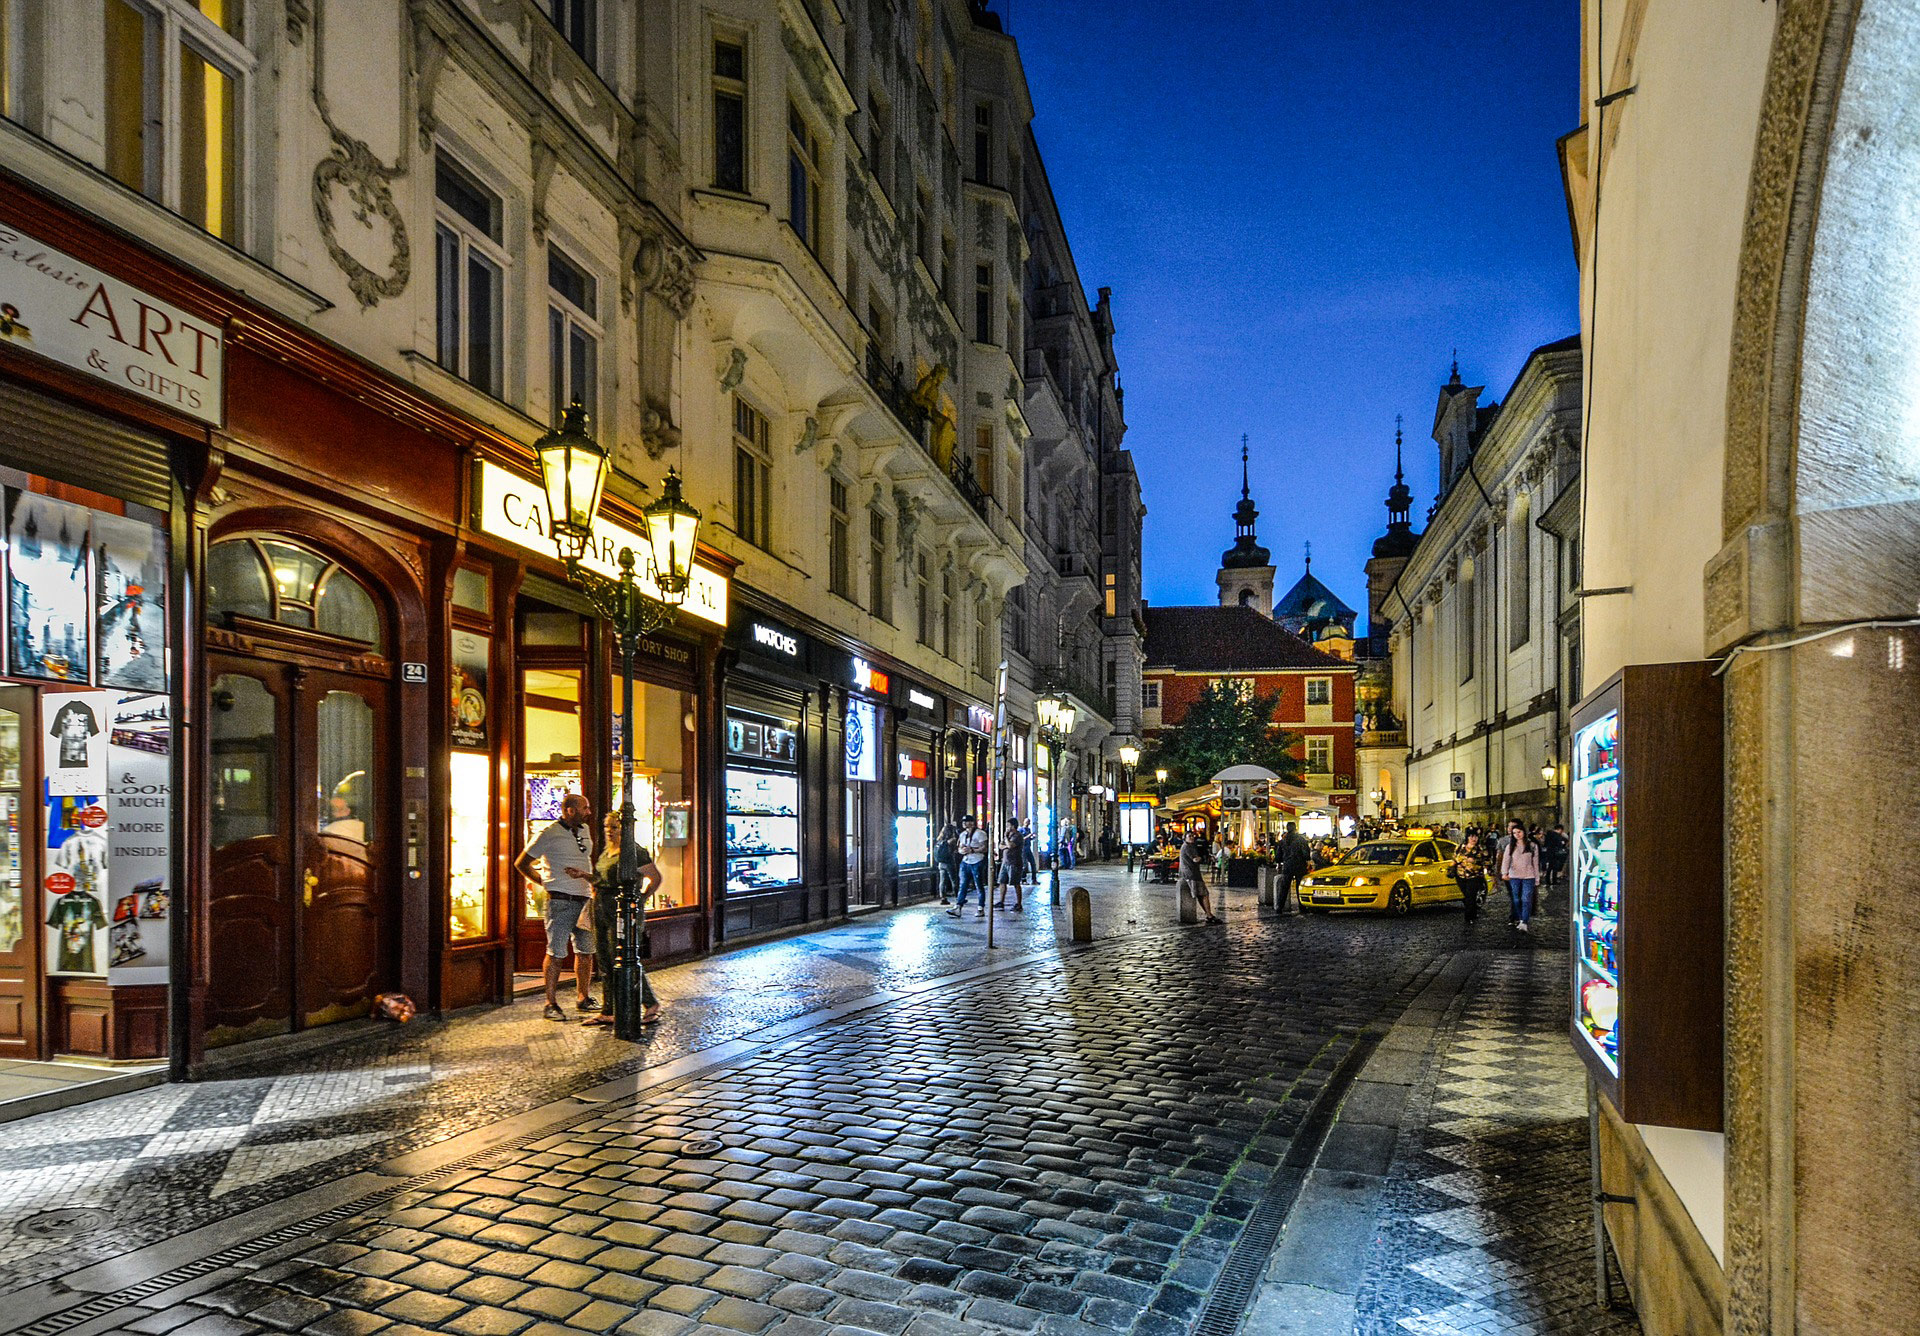 Prague Travel Guide — How to Visit Prague on a Budget